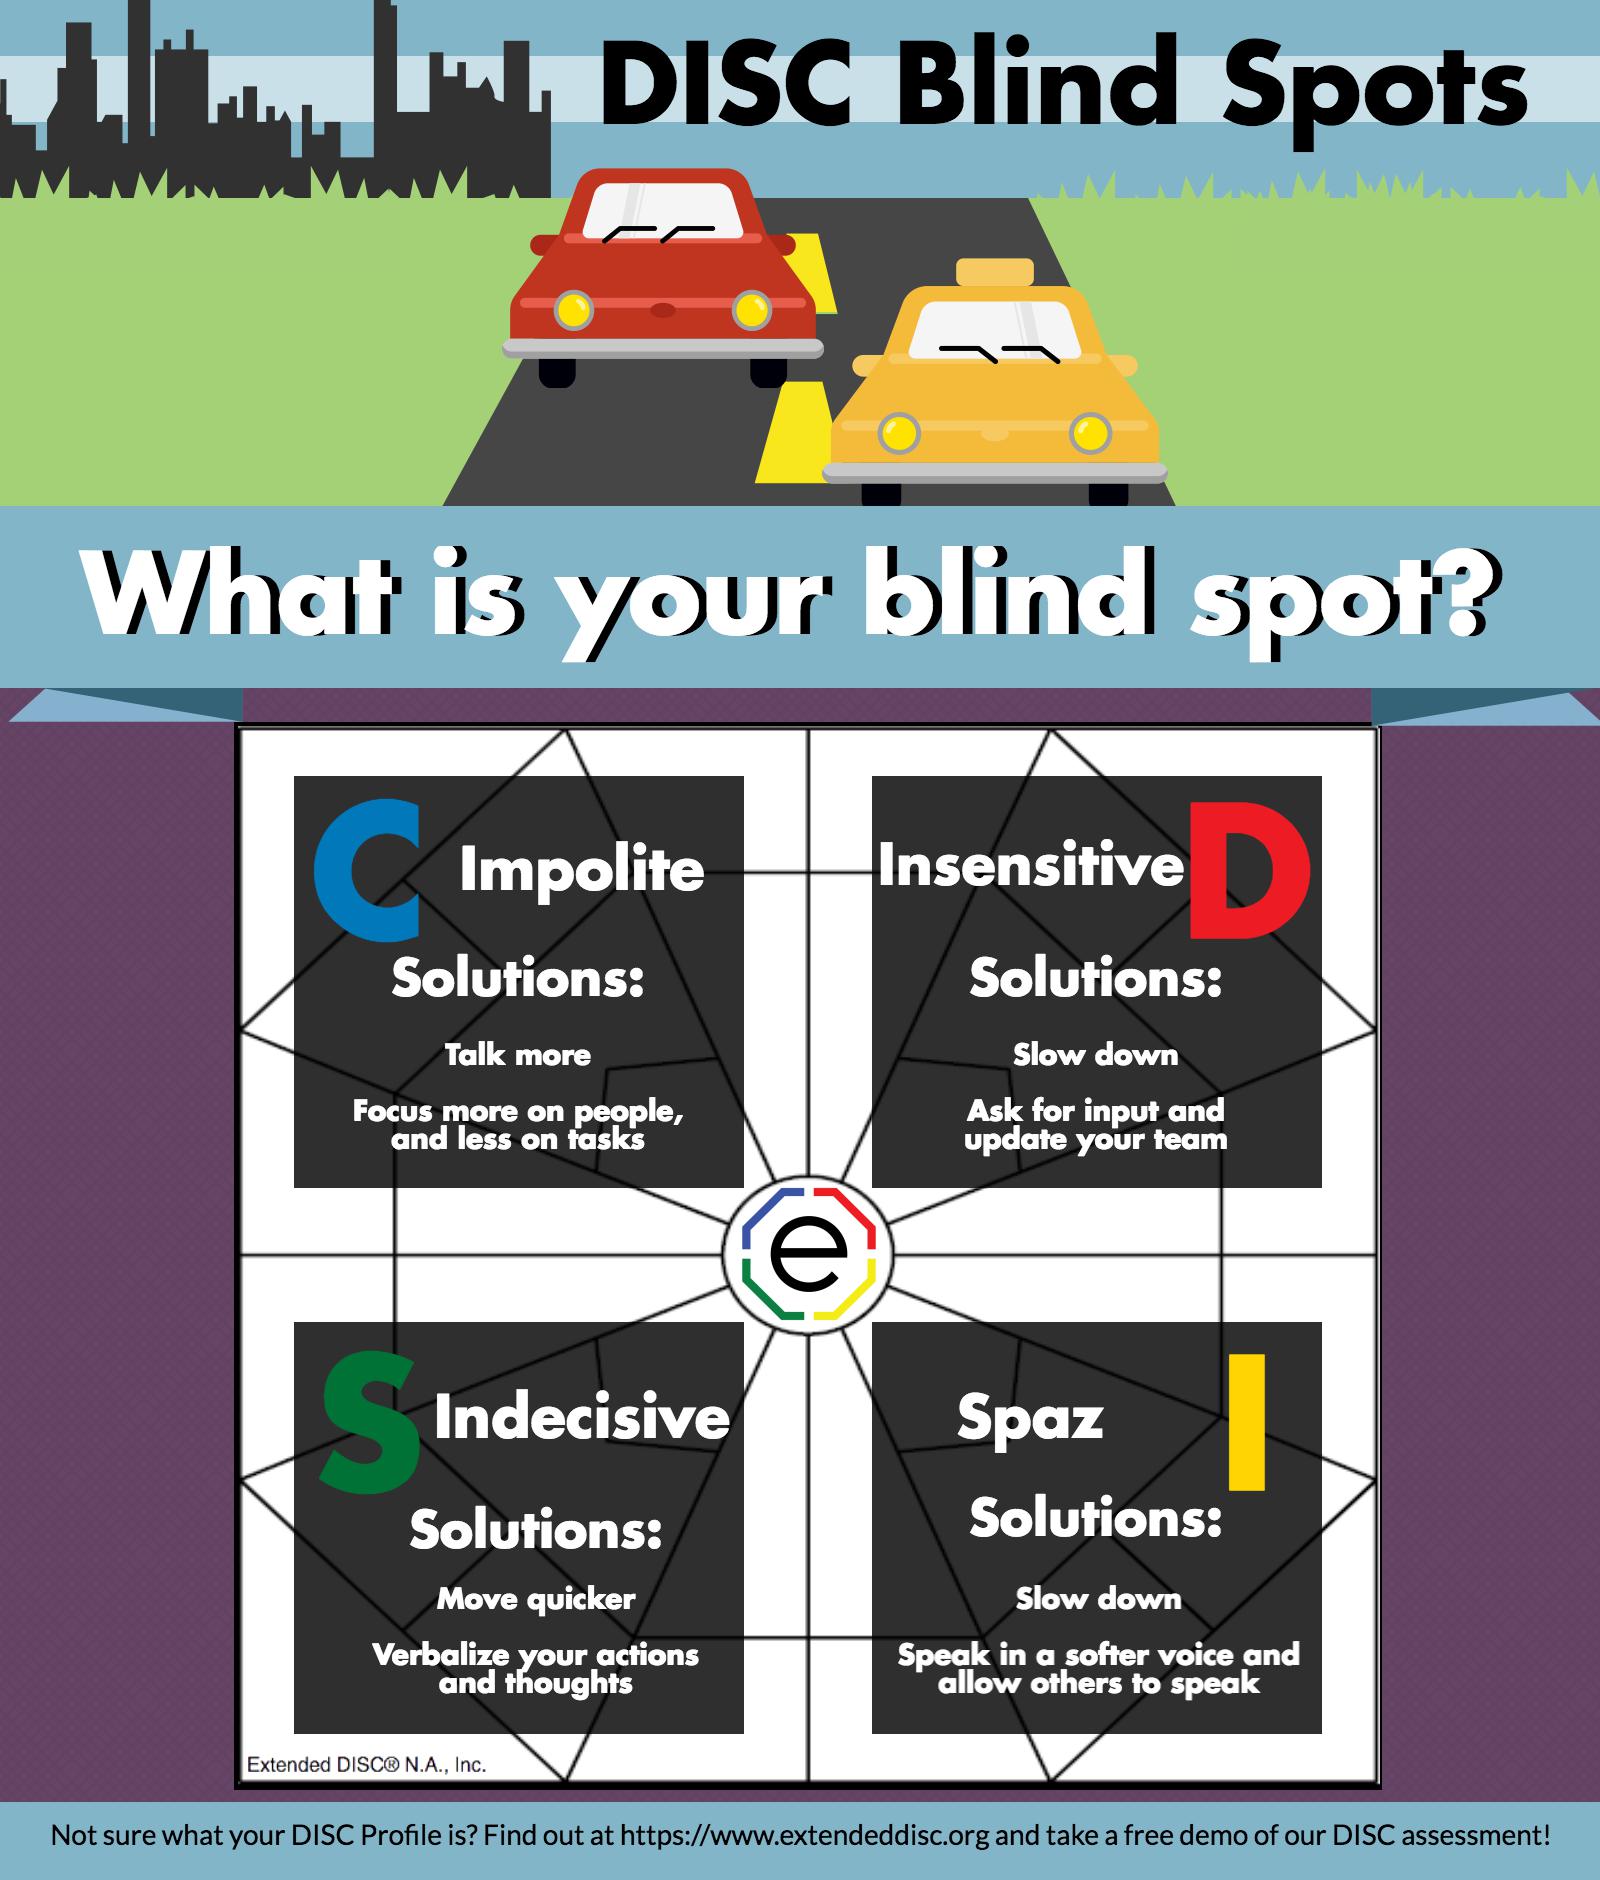 Find Your Blind Spot!